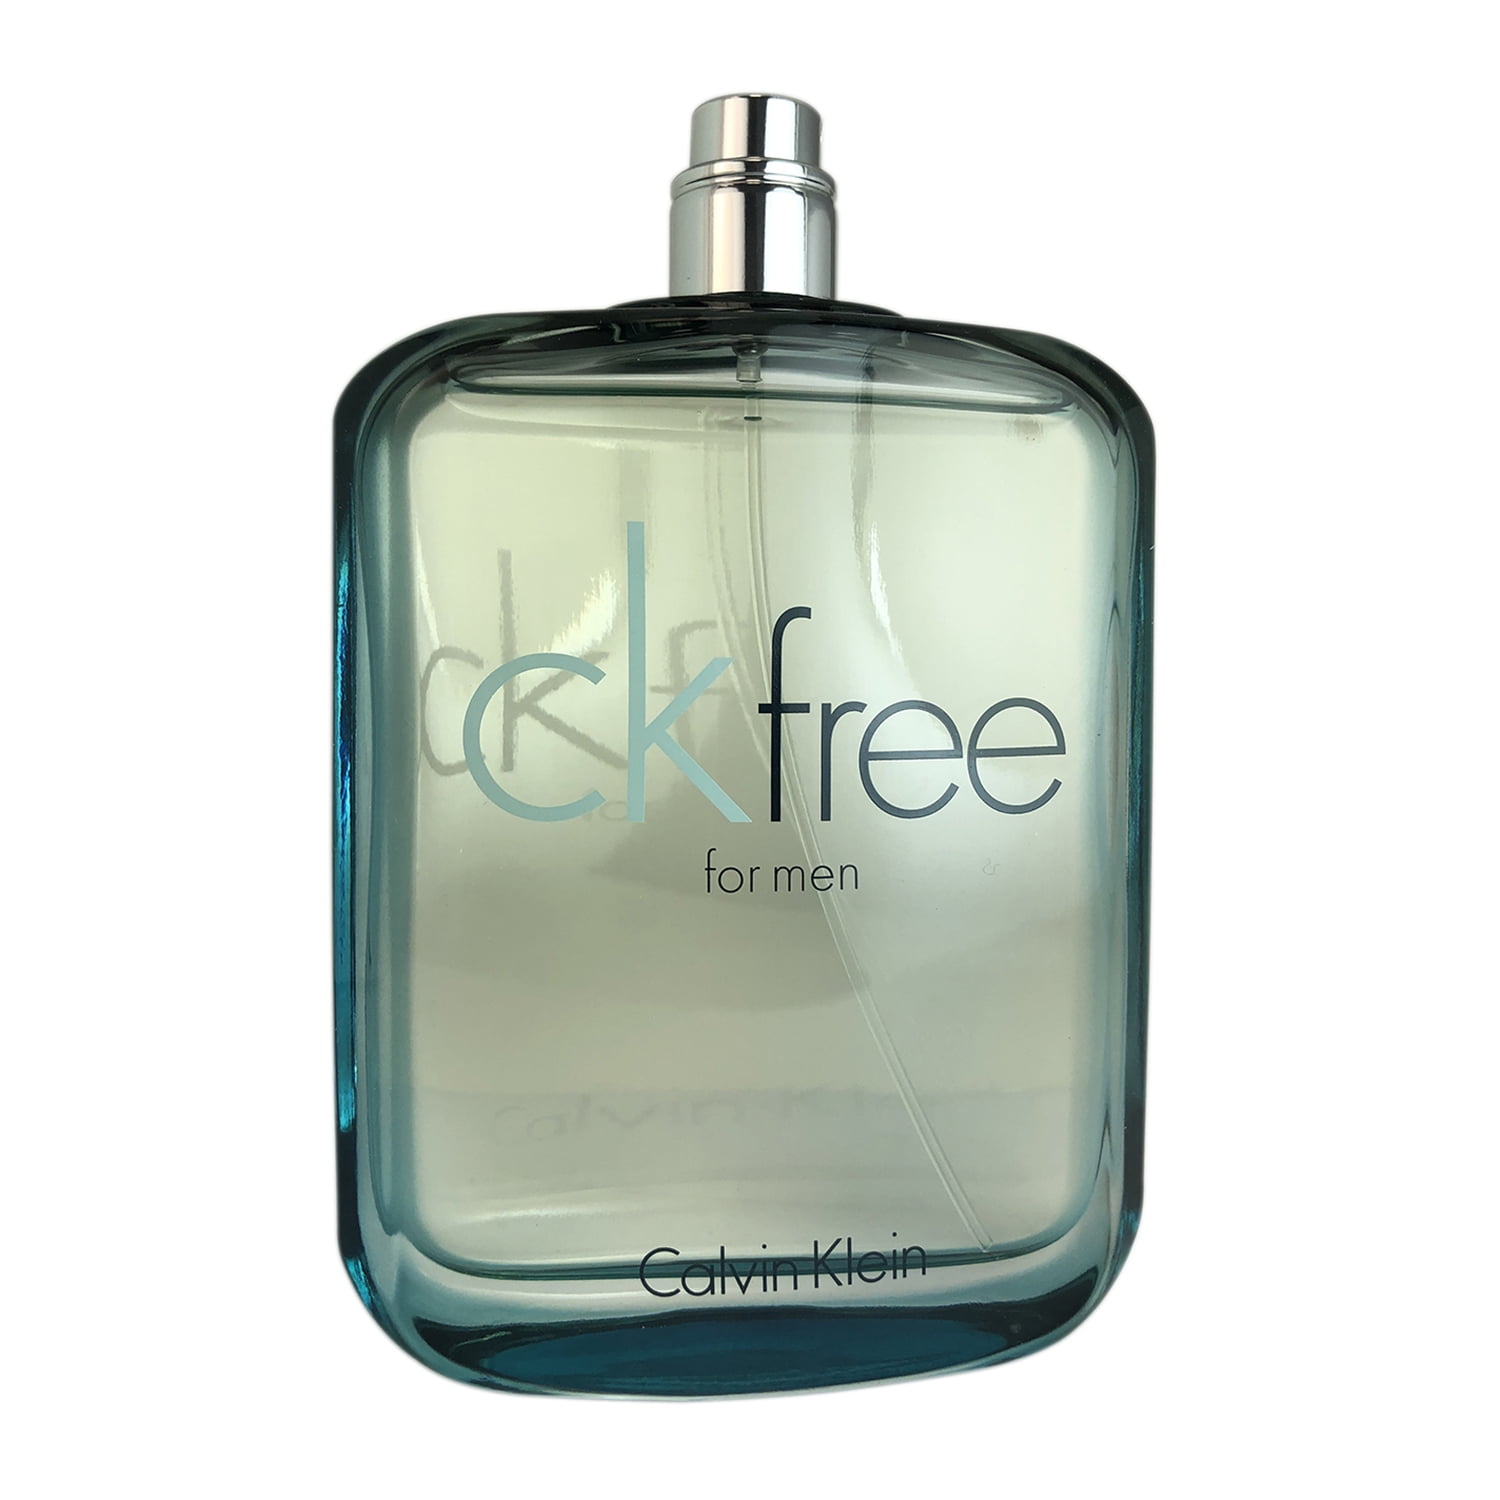 ck free perfume